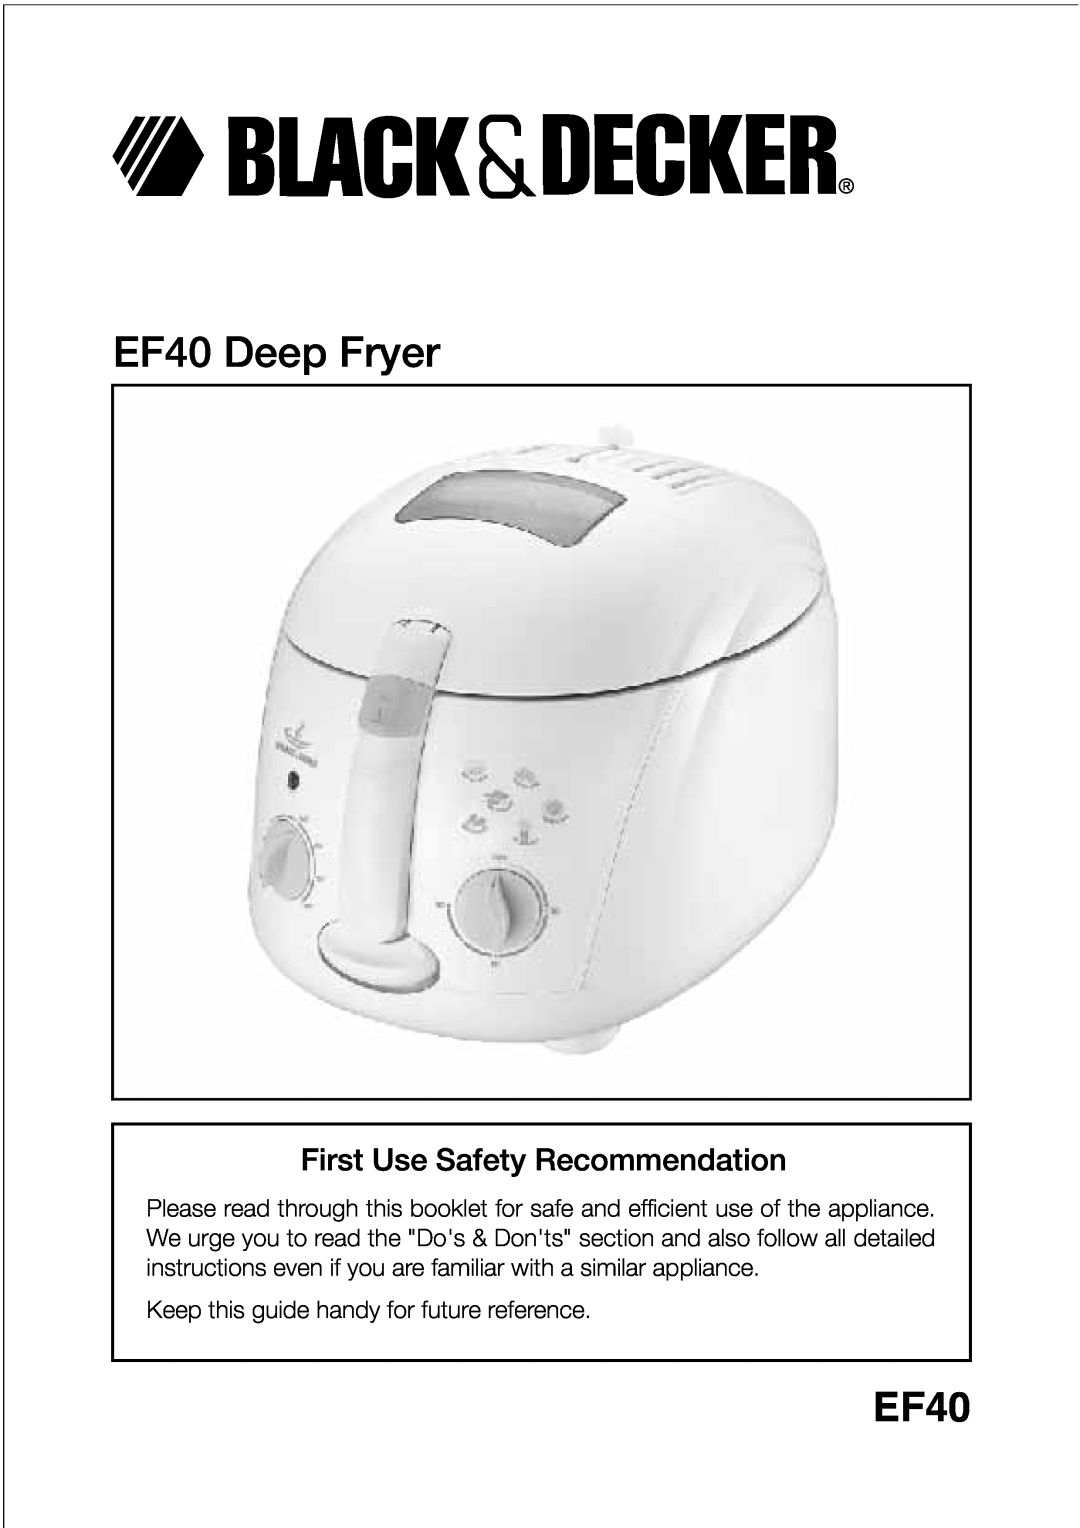 Black & Decker manual EF40 Deep Fryer, First Use Safety Recommendation 